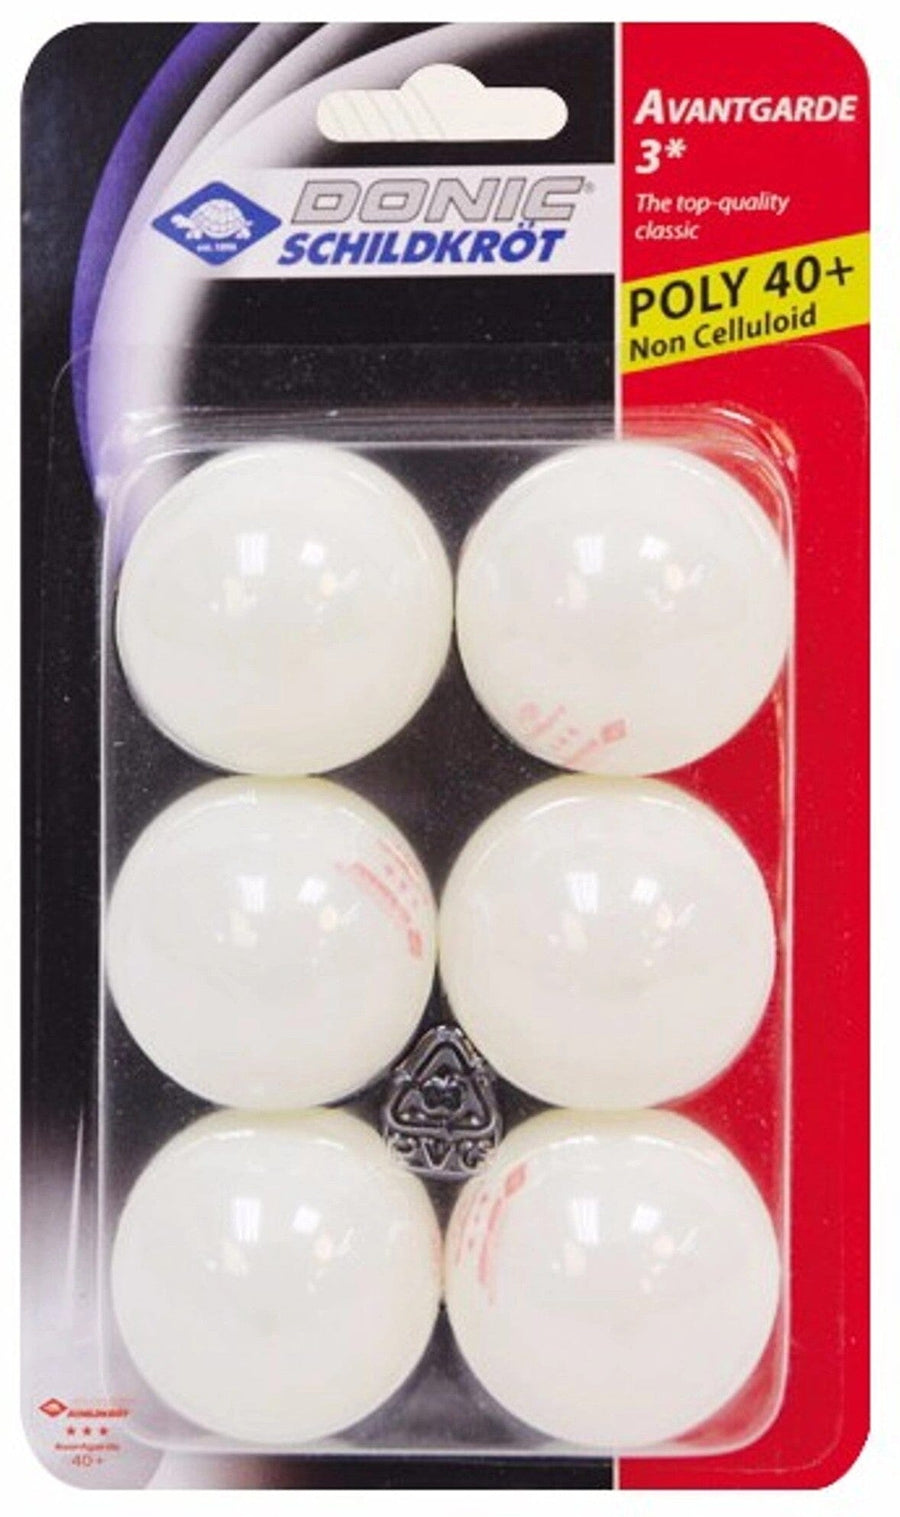 Donic-Schildkrot 3-STAR 3* AvantGarde 40+ W Table Tennis Balls (pack of 6) Ping-pong balls Donic 